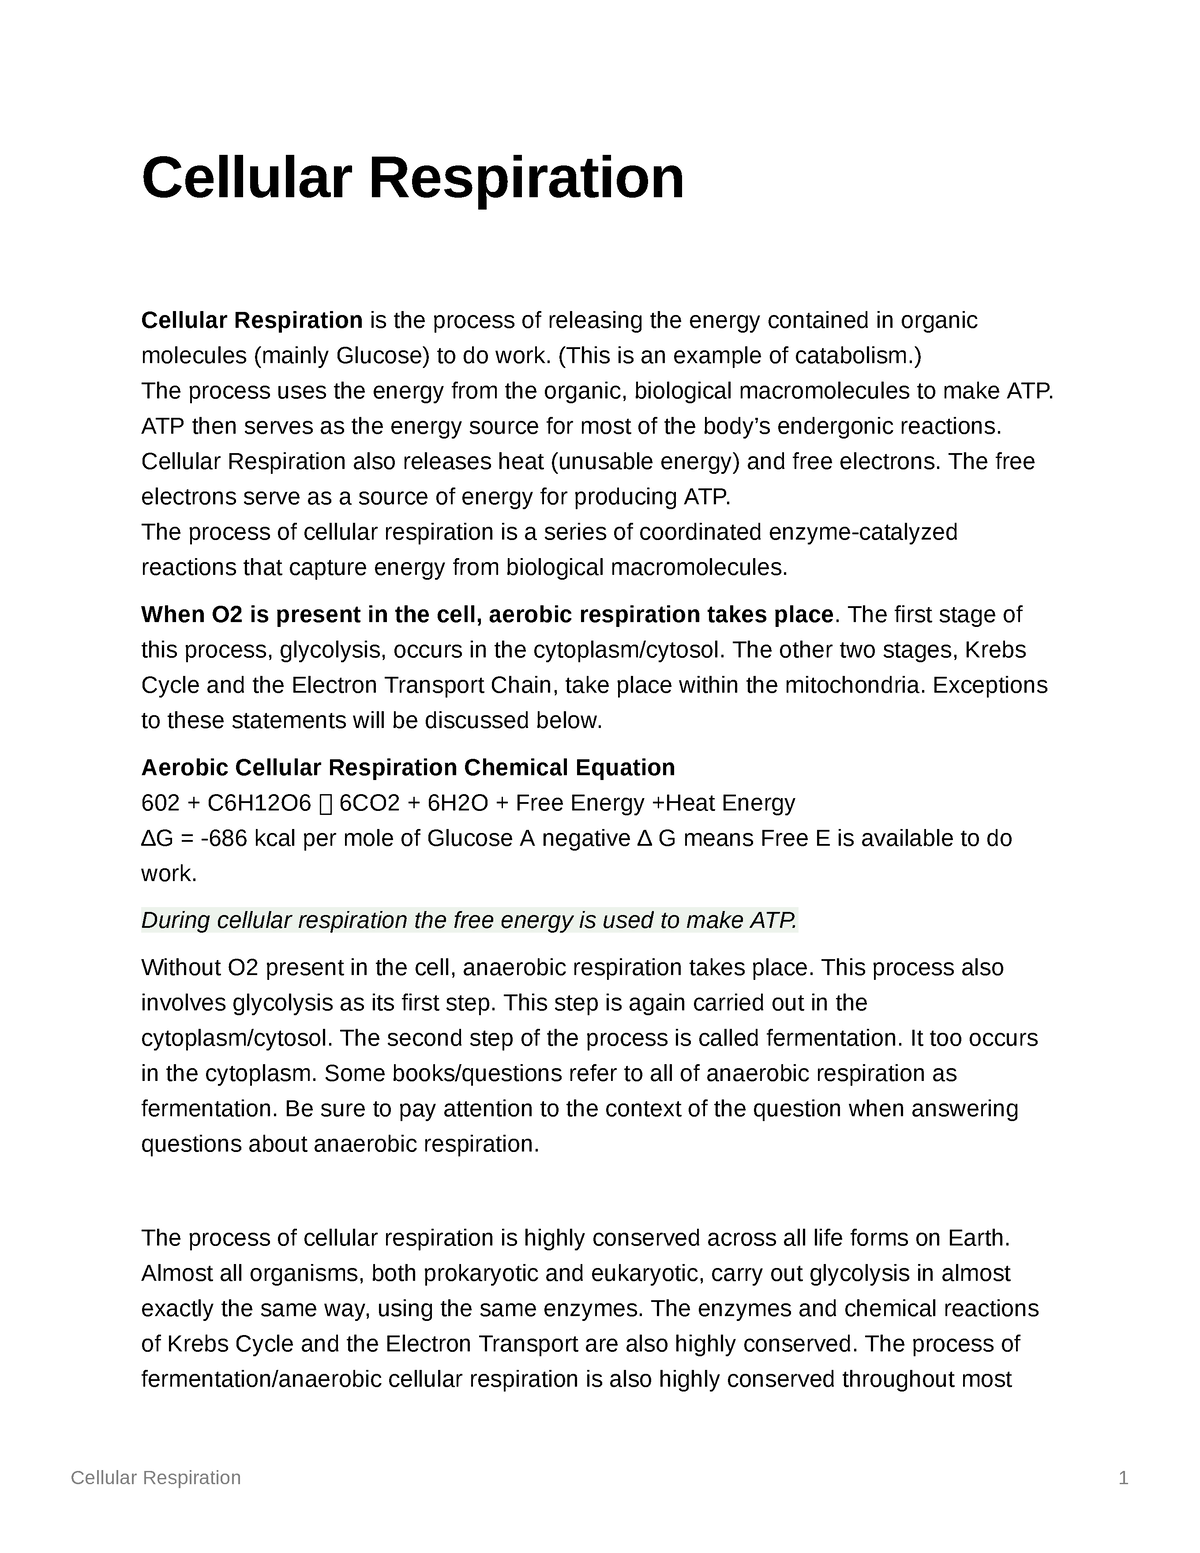 my cellular respiration essay